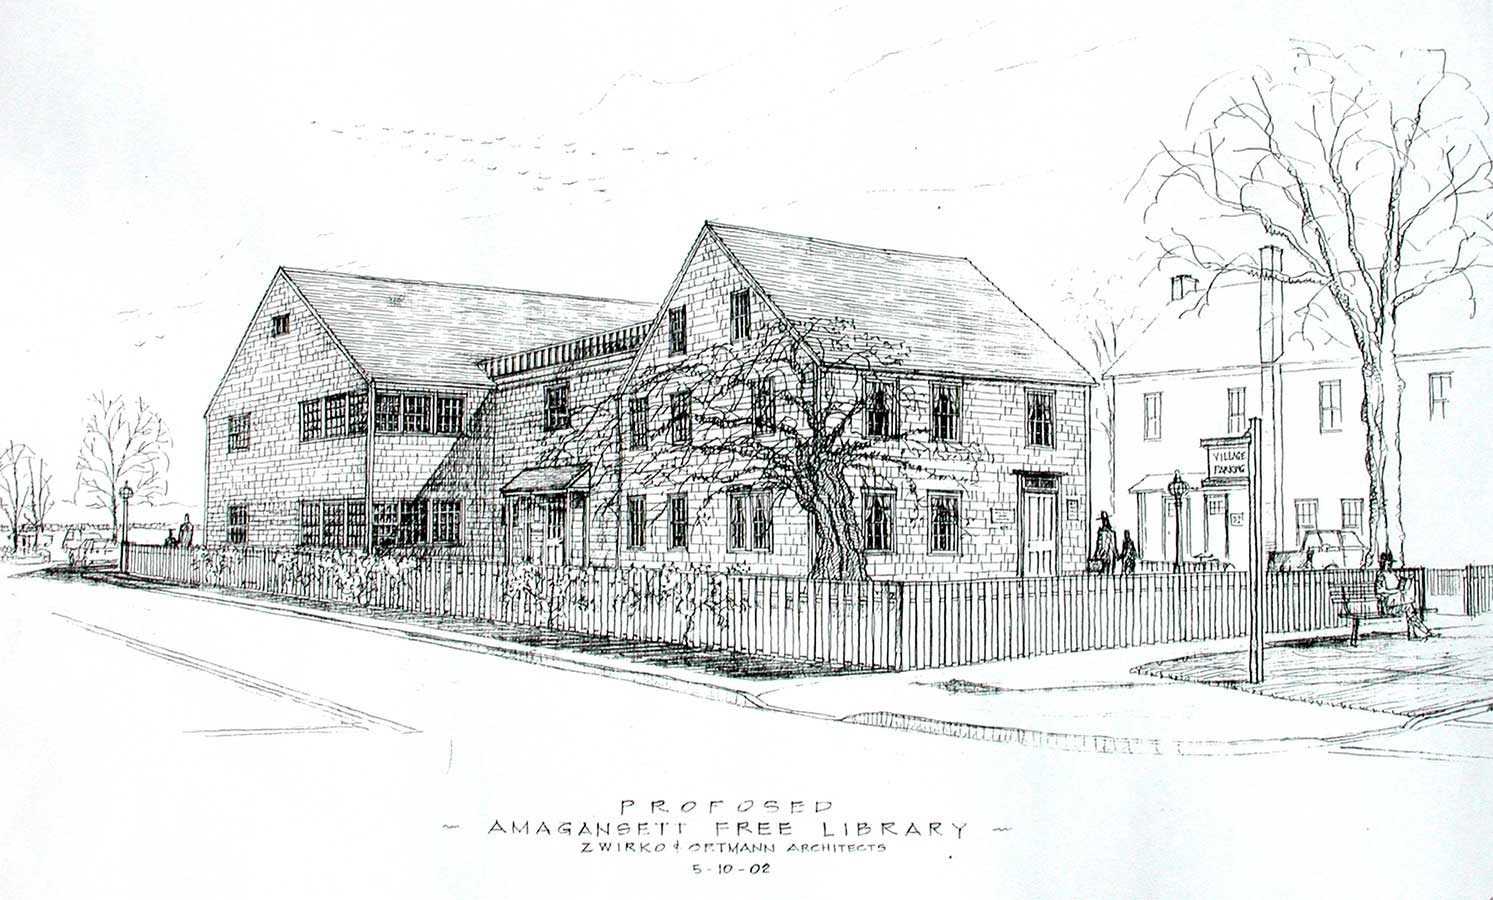 Zwirko, Ortmann & Hugo Architects - Historical Projects - Amagansett Library